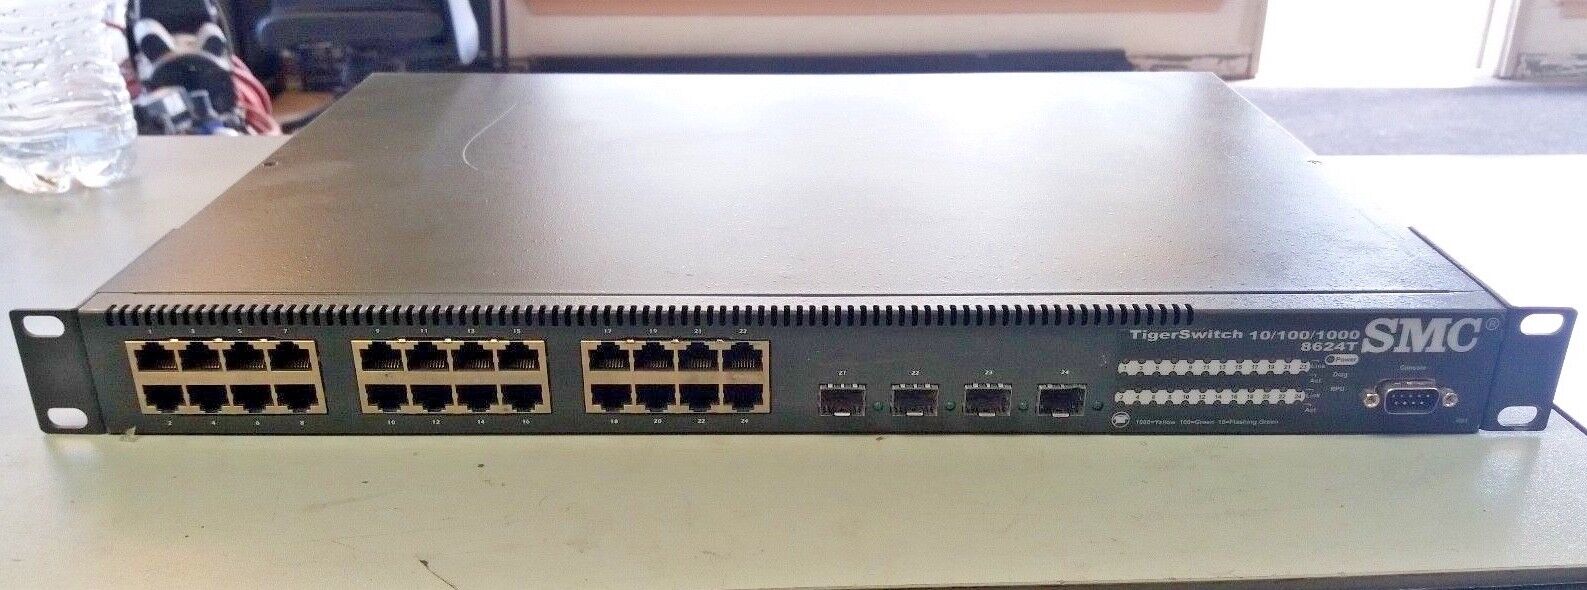 - SMC 8624T TigerSwitch 10/100/1000 24-Port Gigabit Ethernet/Network Switch